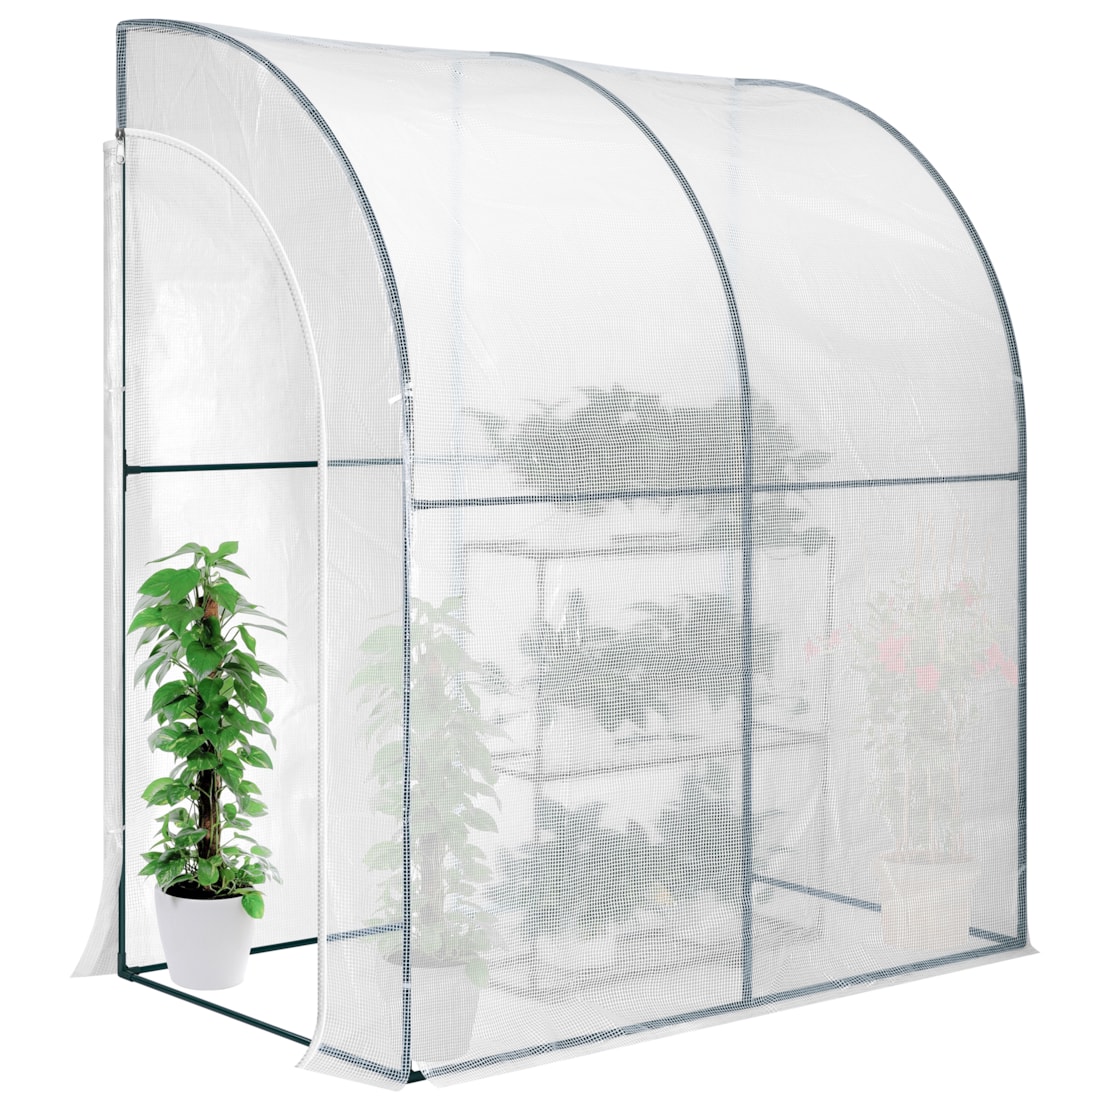 VIVOSUN Mini Lean-to Greenhouse, 39x79x83-Inch